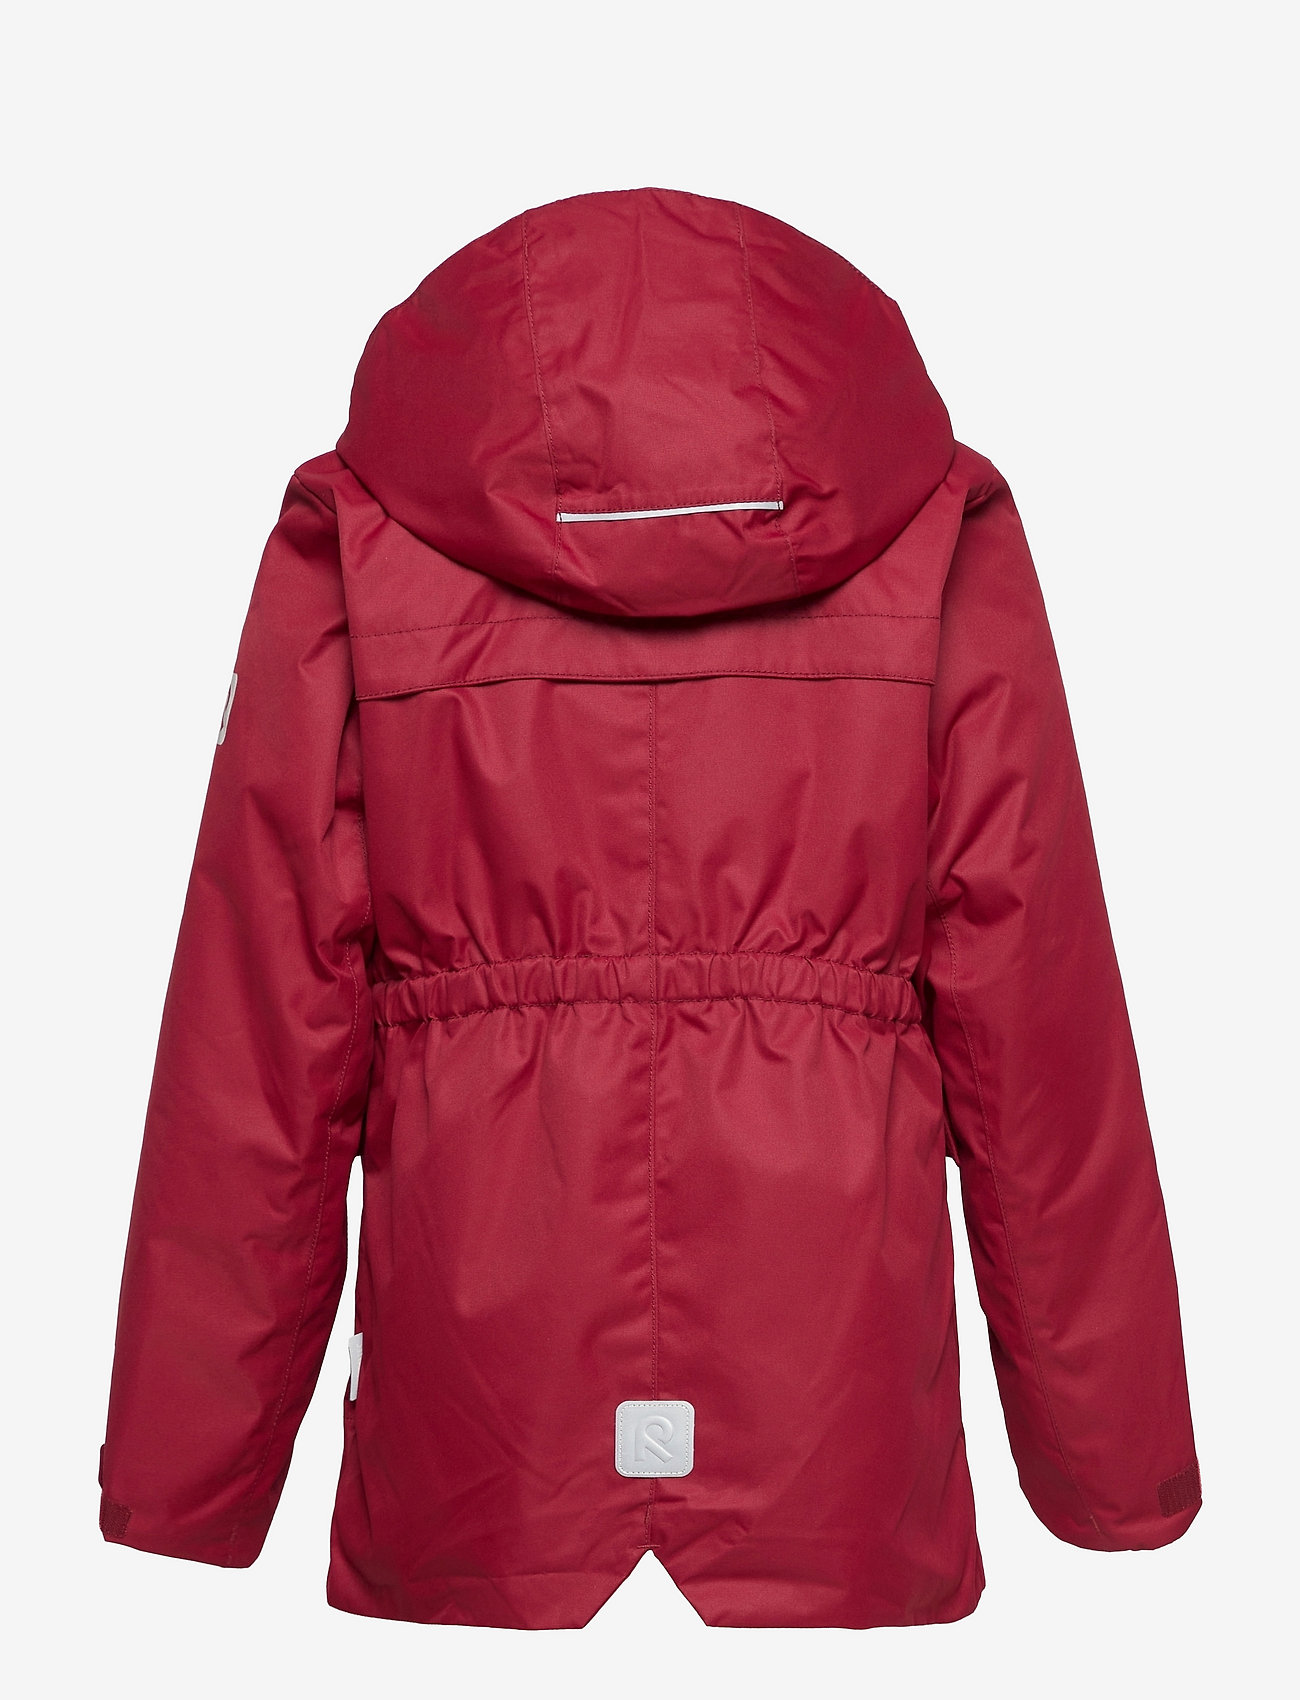 Reima - Reimatec winter jacket Pikkuserkku - „parka“ stiliaus paltai - jam red - 1